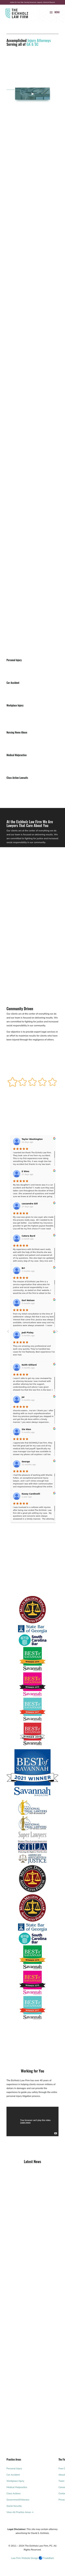 The Eichholz Law Firm, P.C. - Savannah GA Lawyers